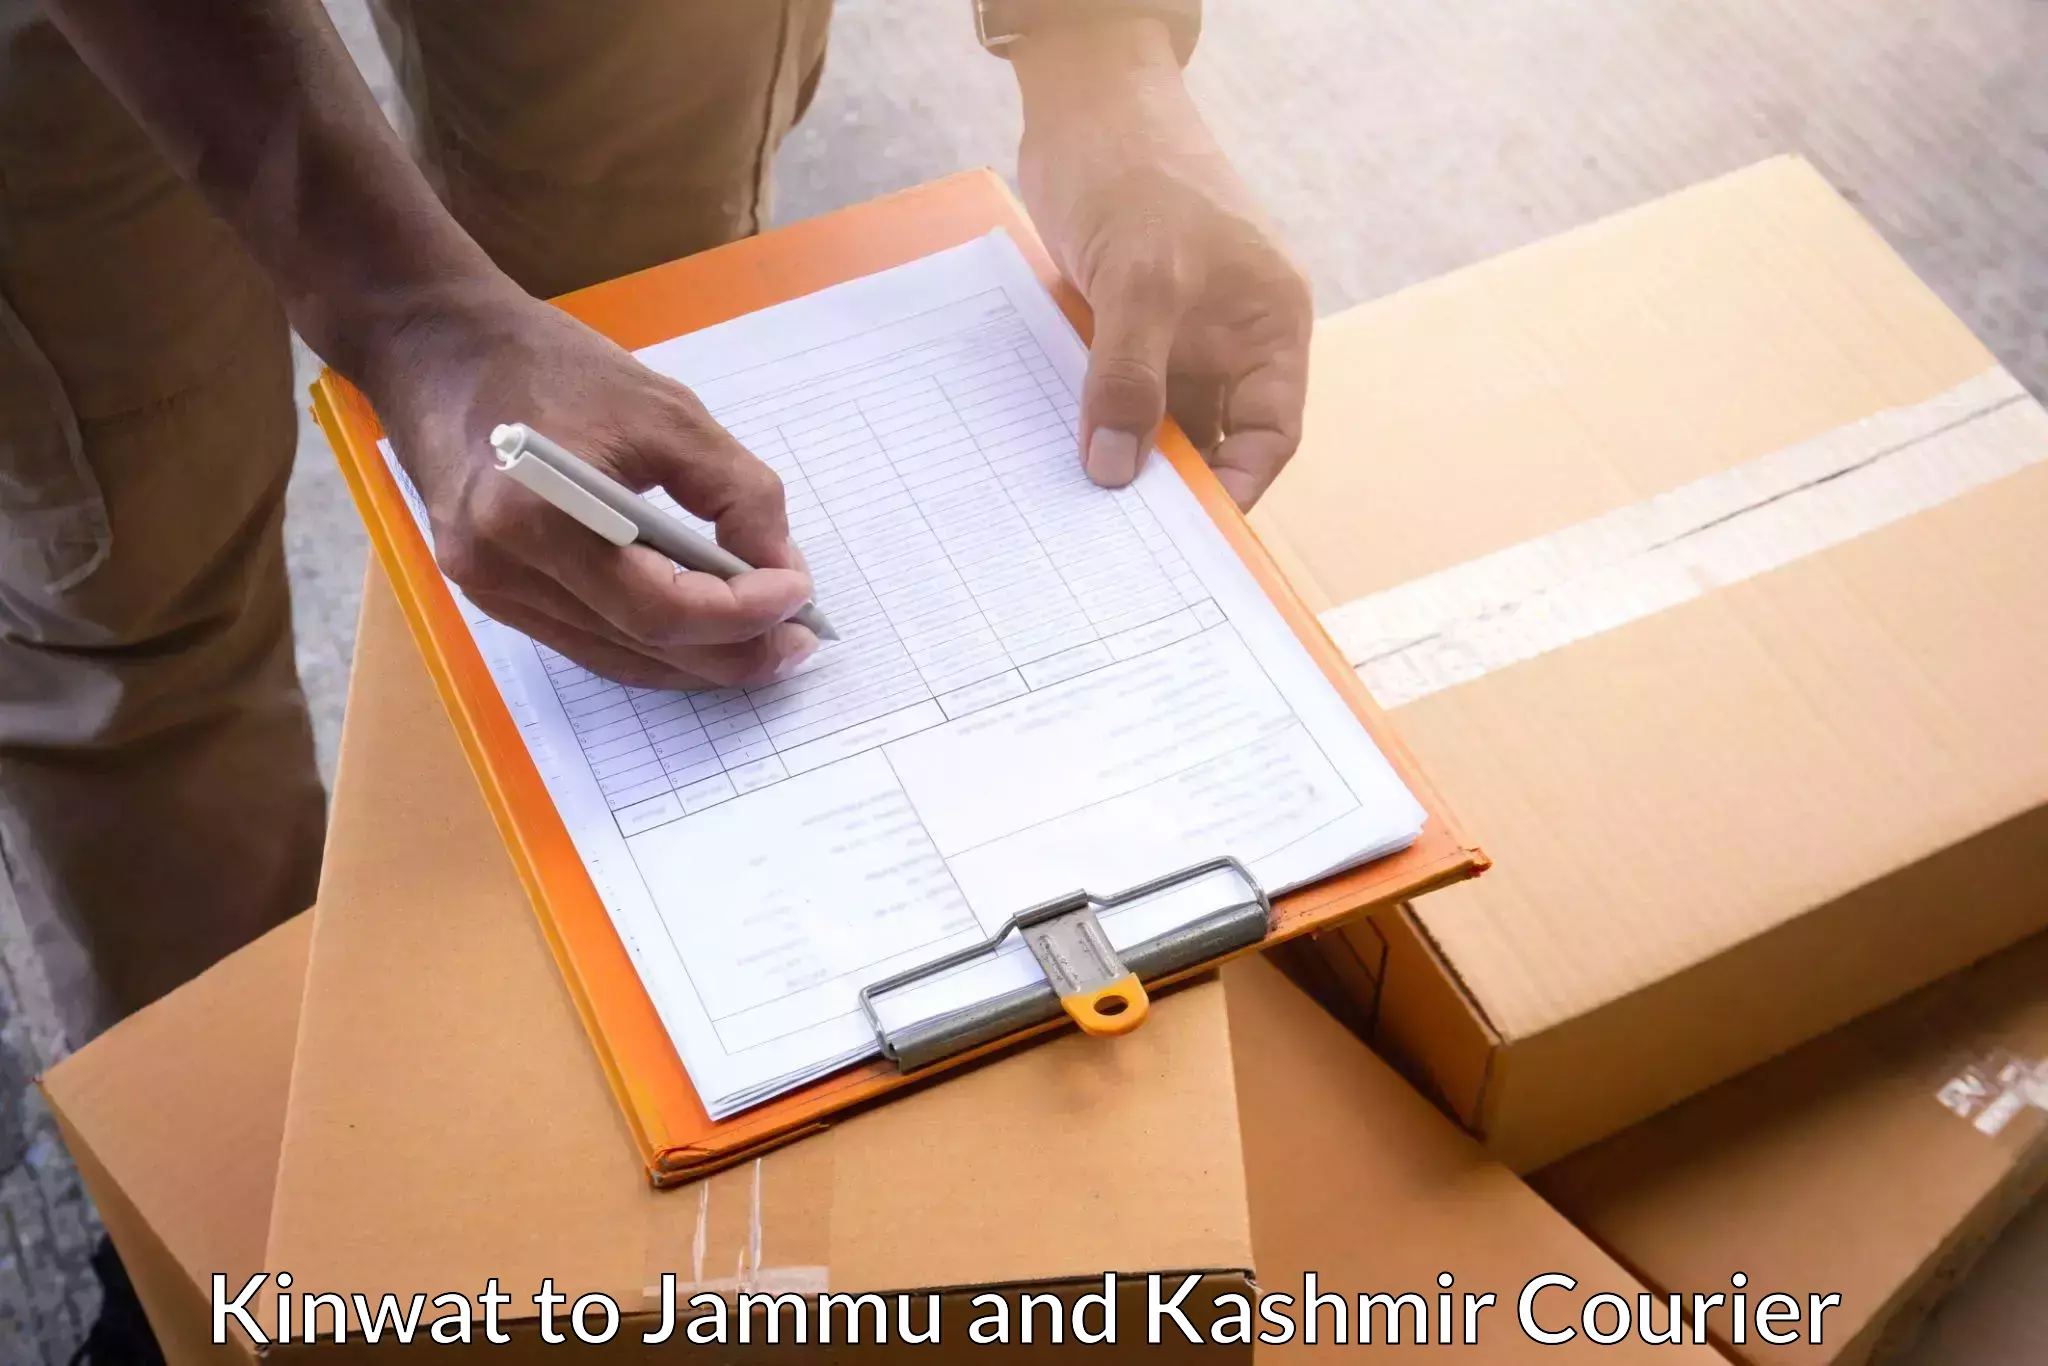 Logistics service provider Kinwat to Jakh